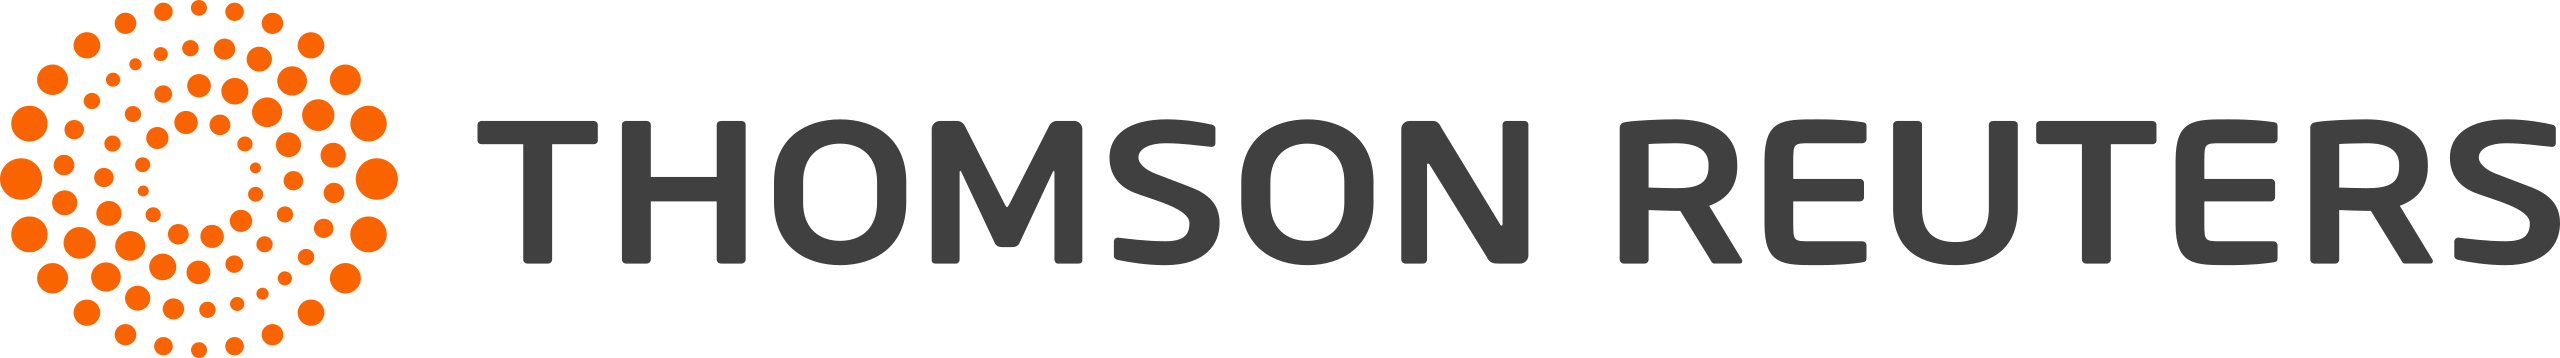 Thomson_Reuters_logo.svg-1.png